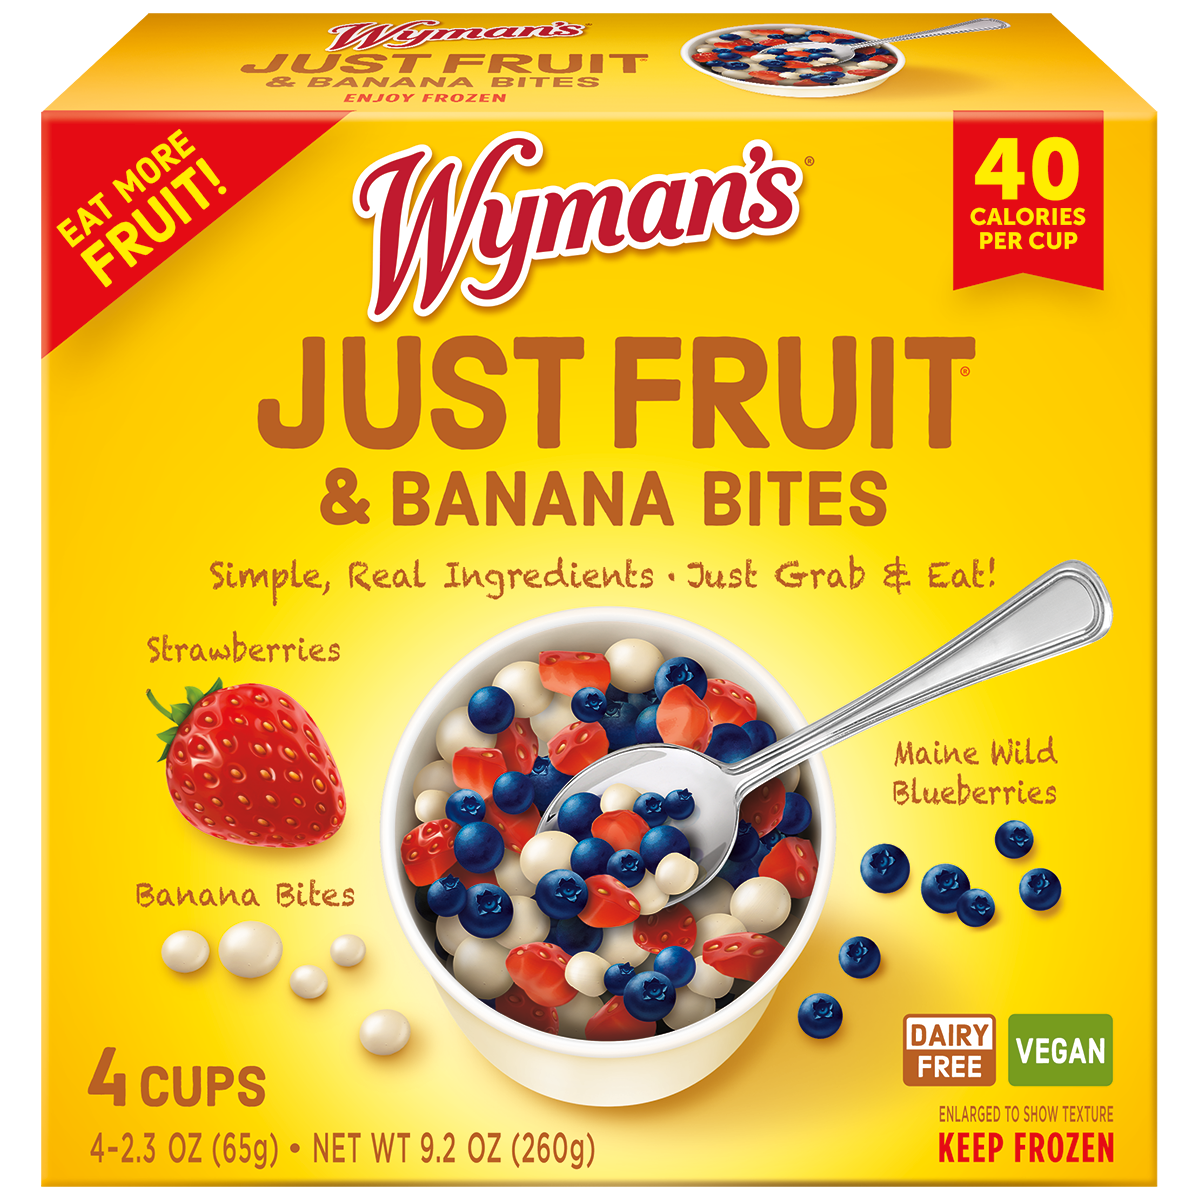 Just Fruit - Wild Blueberries, Strawberries, & Banana Bites